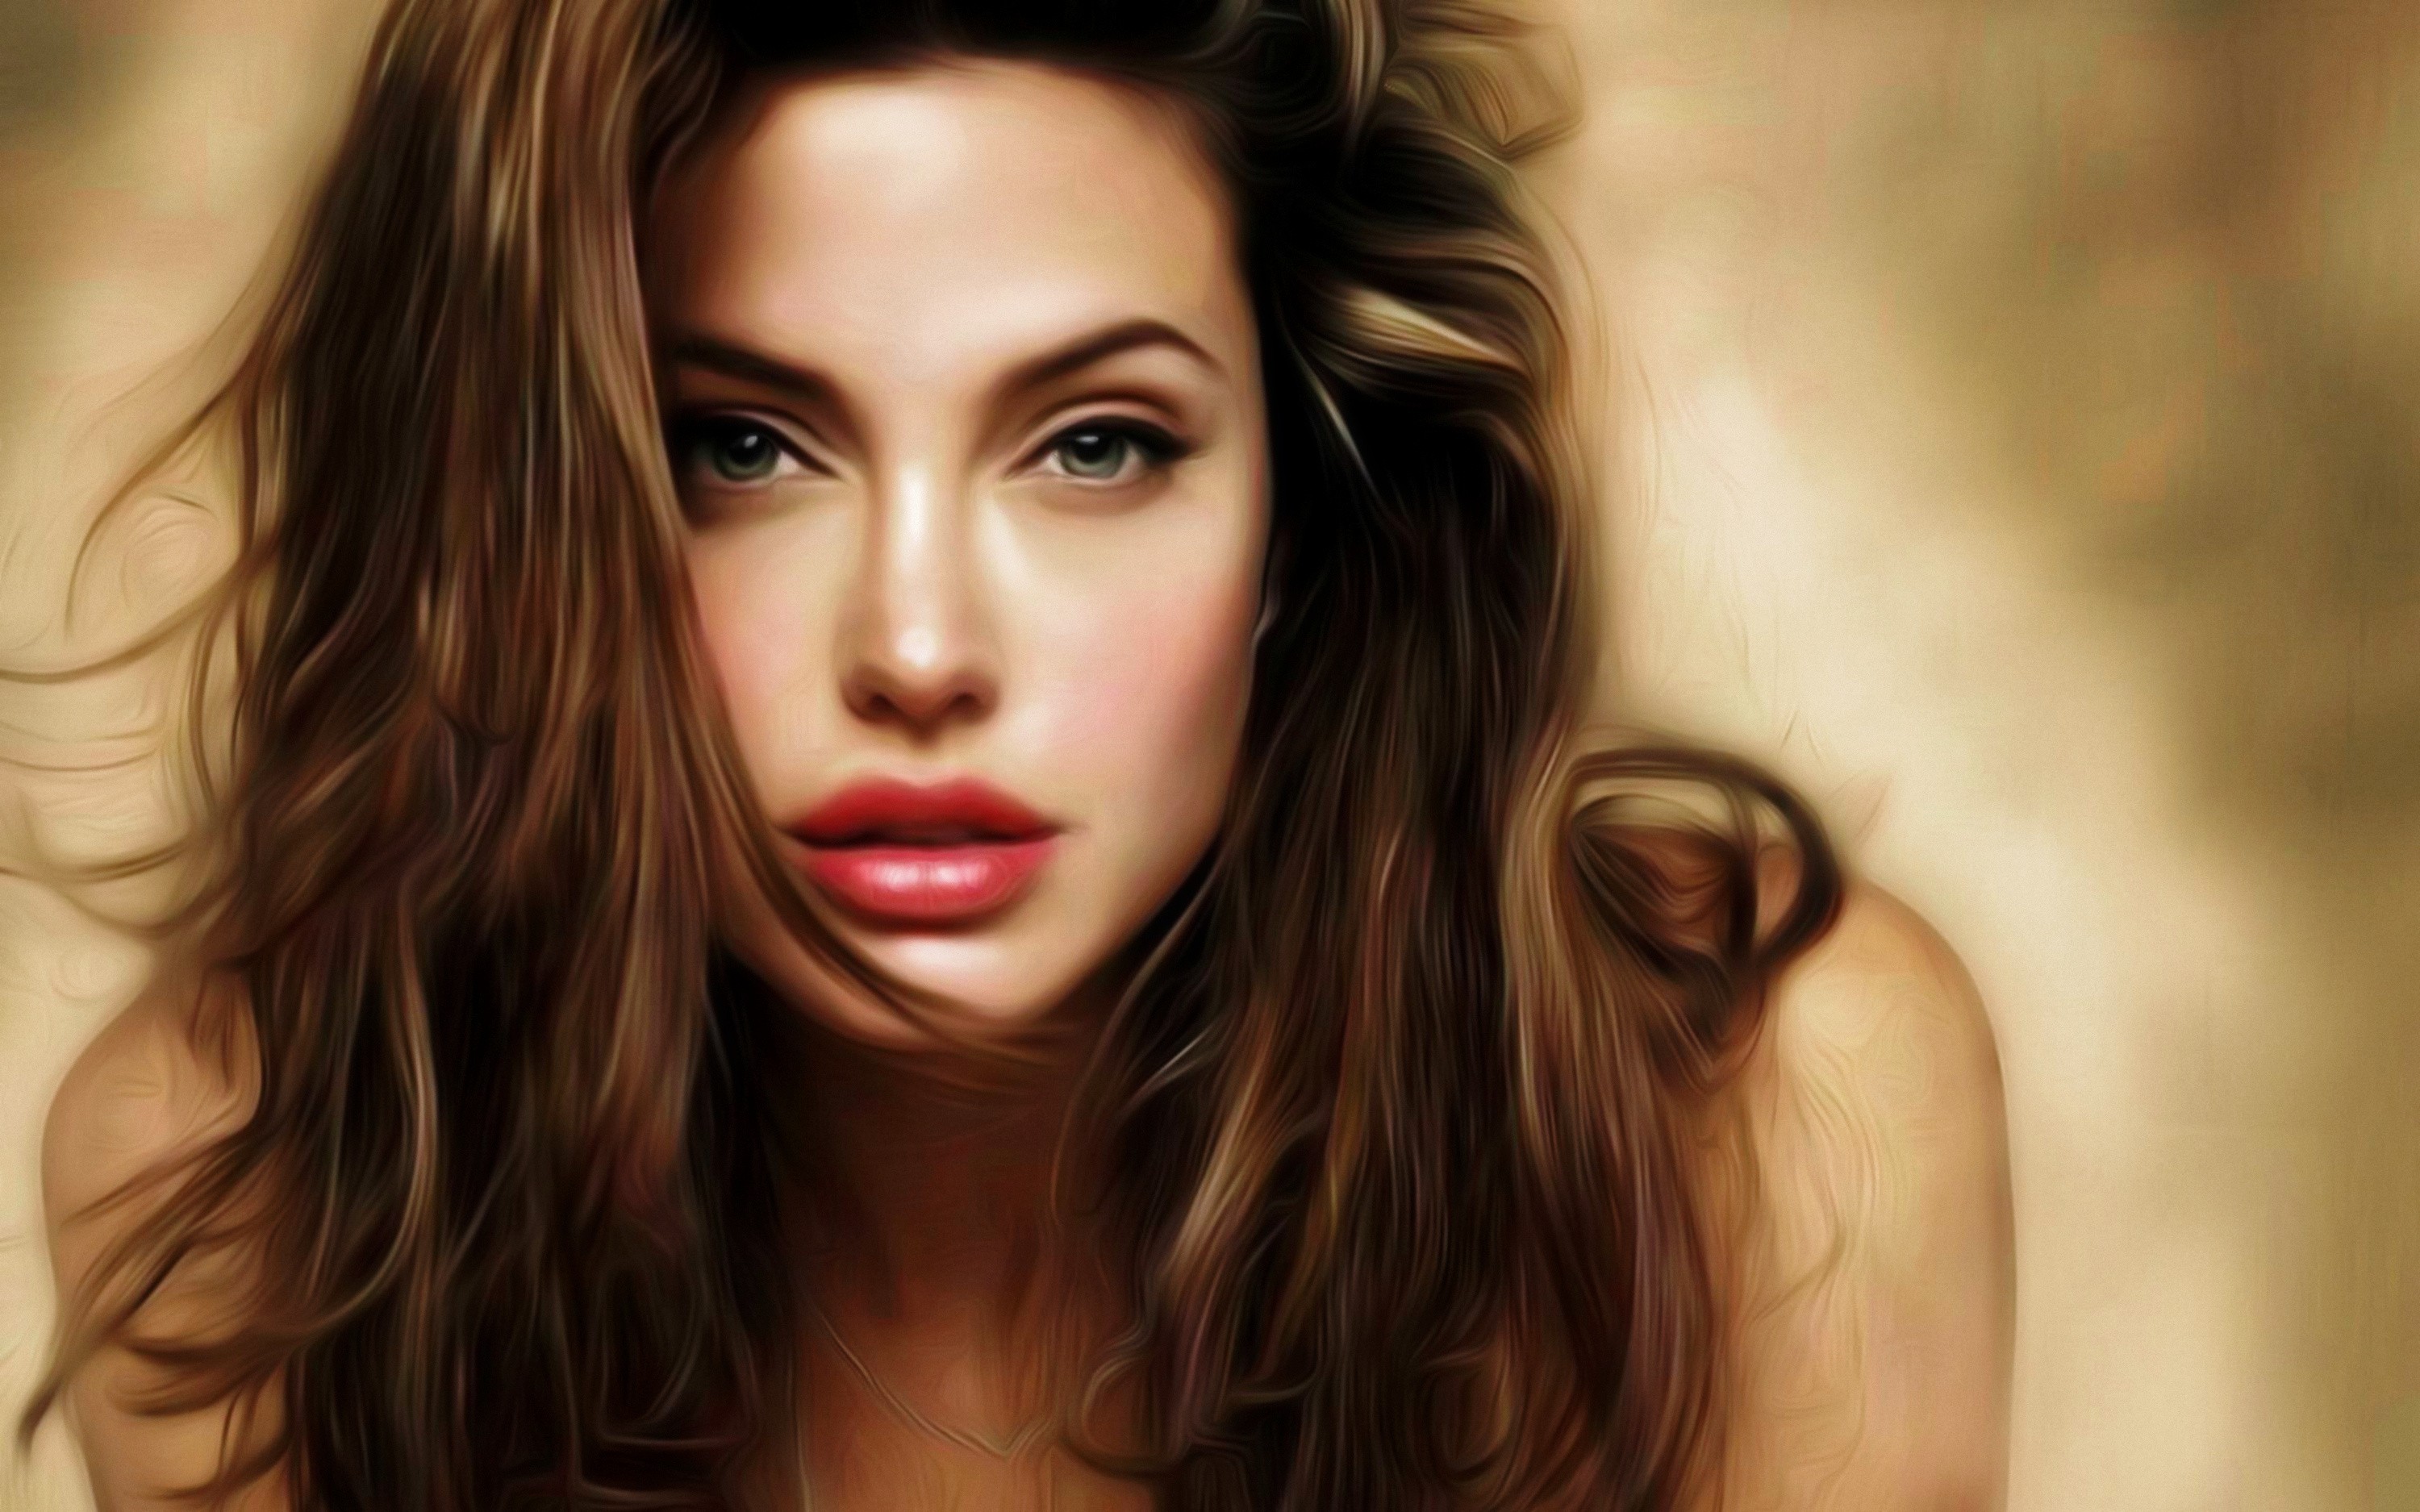 General 3000x1875 women filter face closeup portrait artwork red lipstick simple background looking at viewer long hair celebrity green eyes implied nude Angelina Jolie digital art